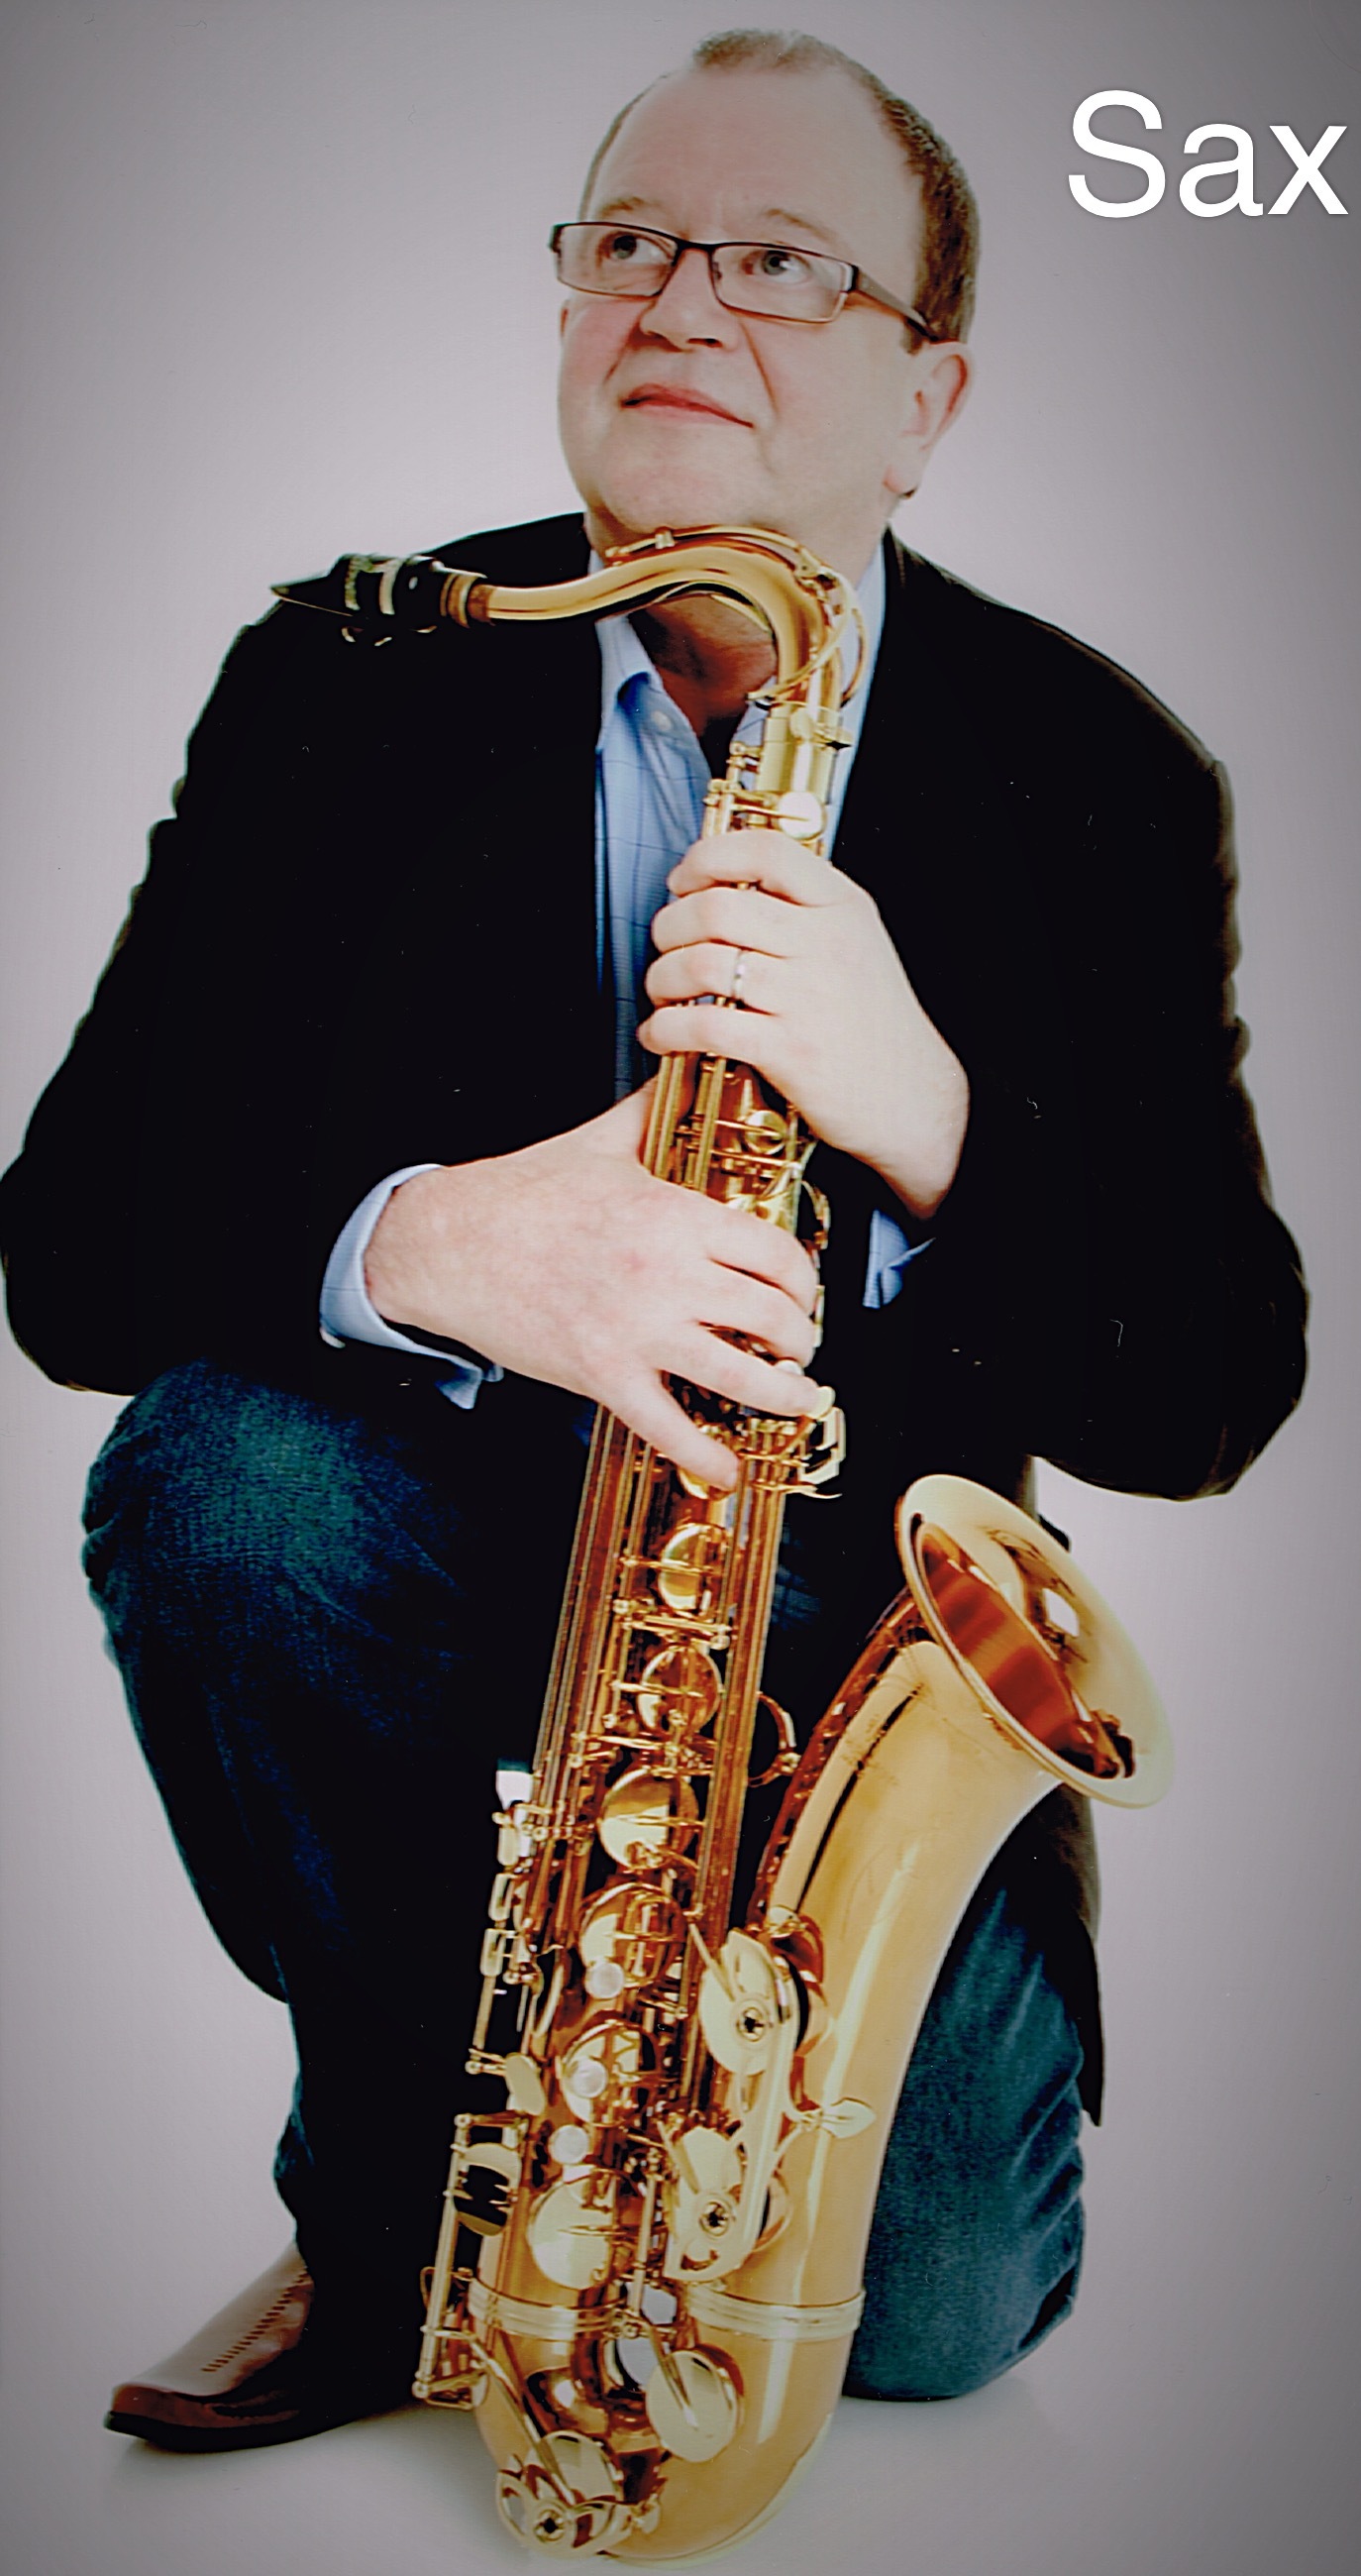 Saxophonist Ken in Northern England, England